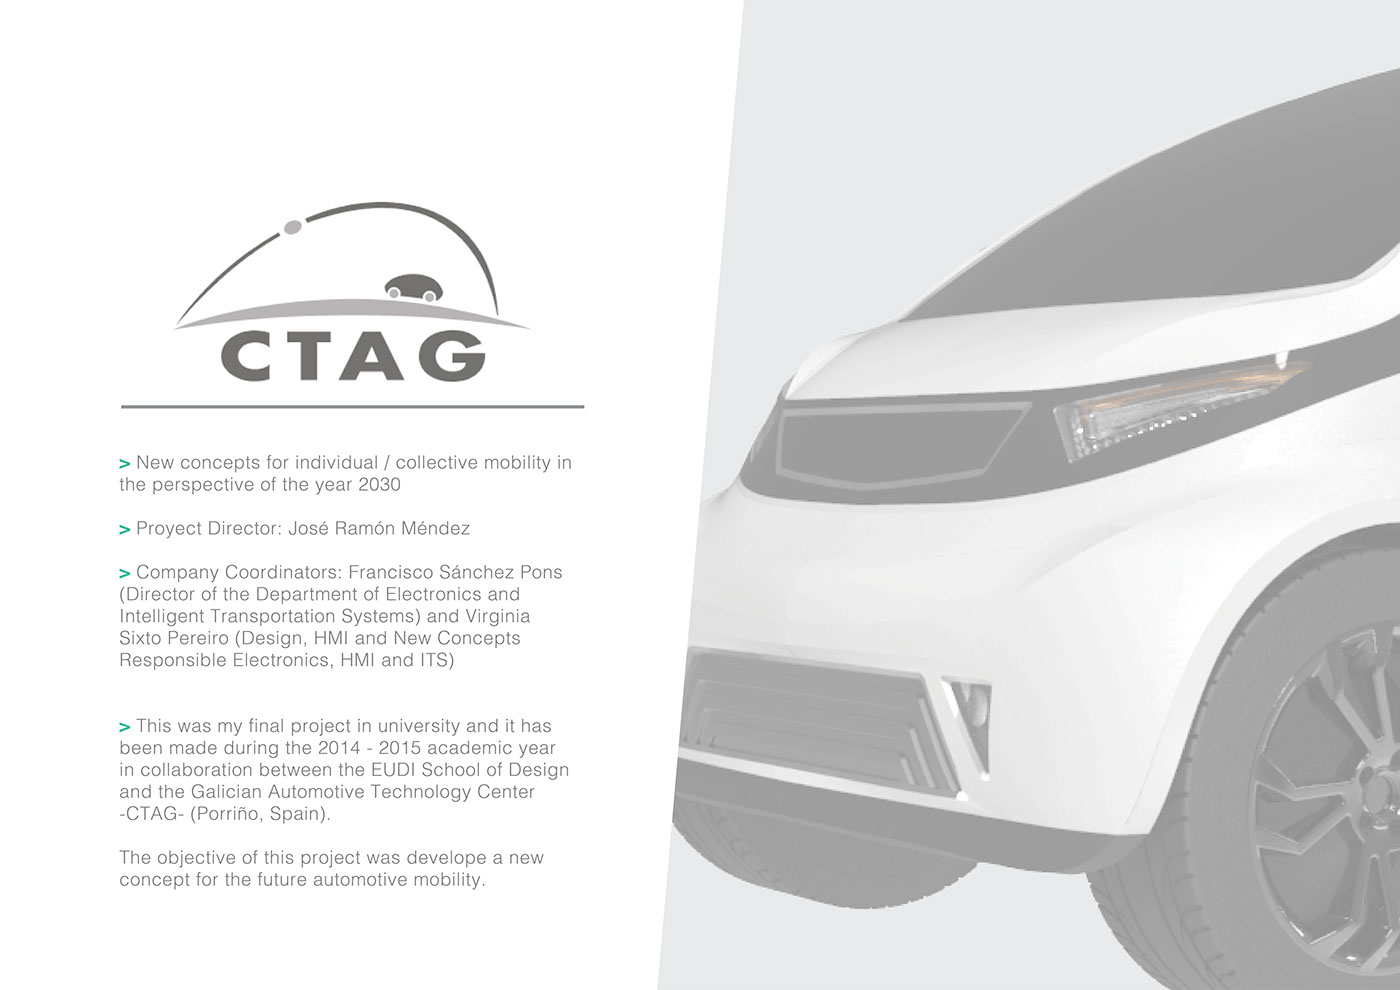 Insuela Carsharing car design quark Concepts for mobility Eudi CTAG